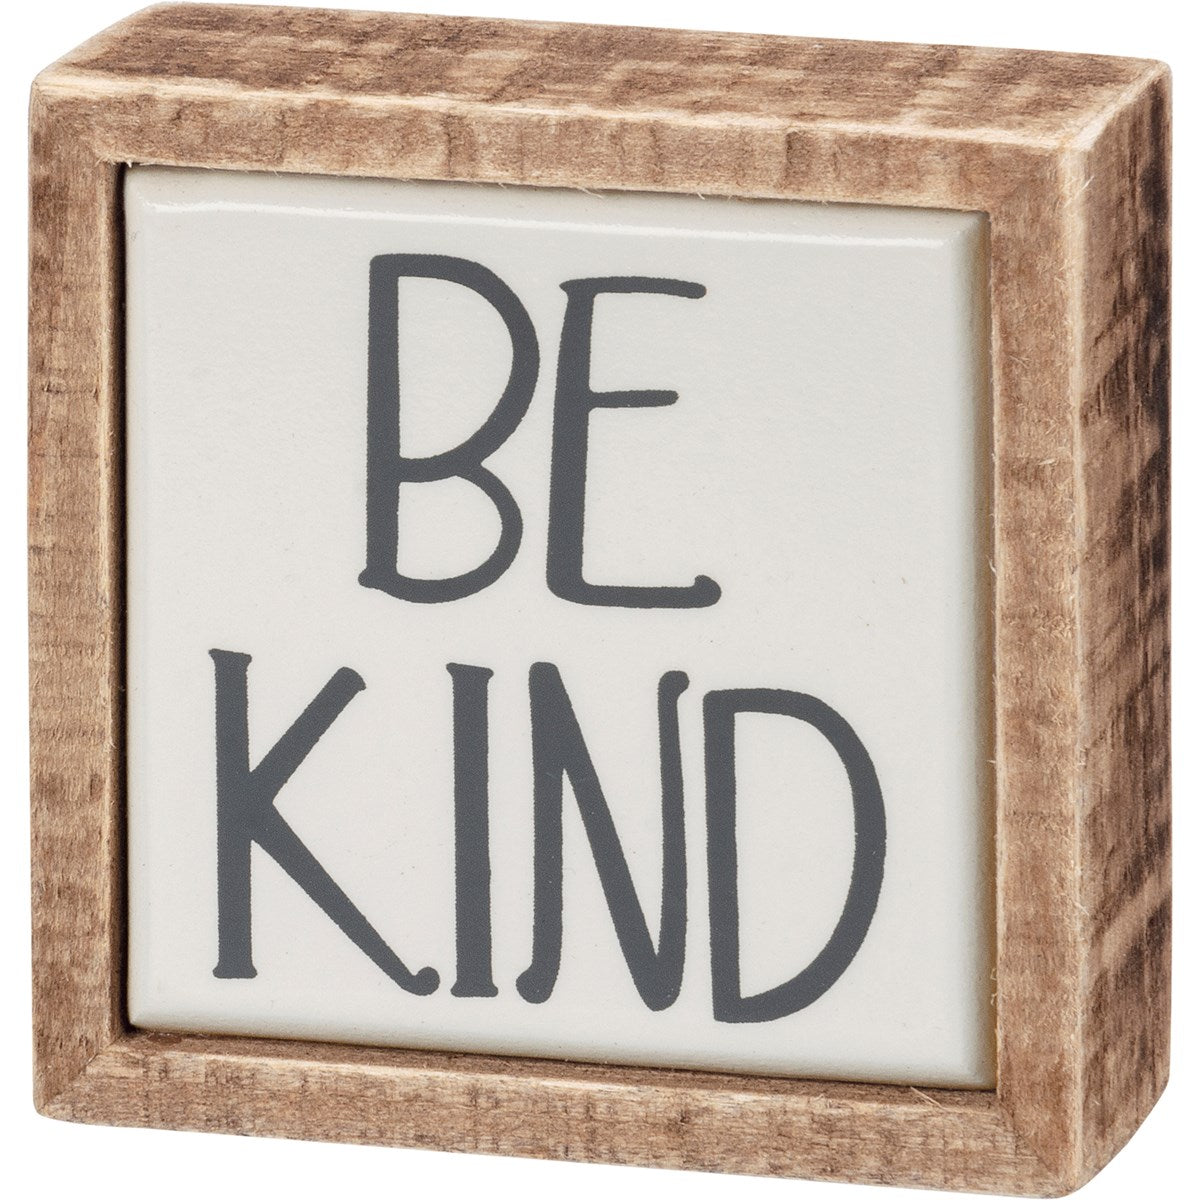 'Be Kind' Mini Box Sign by PBK